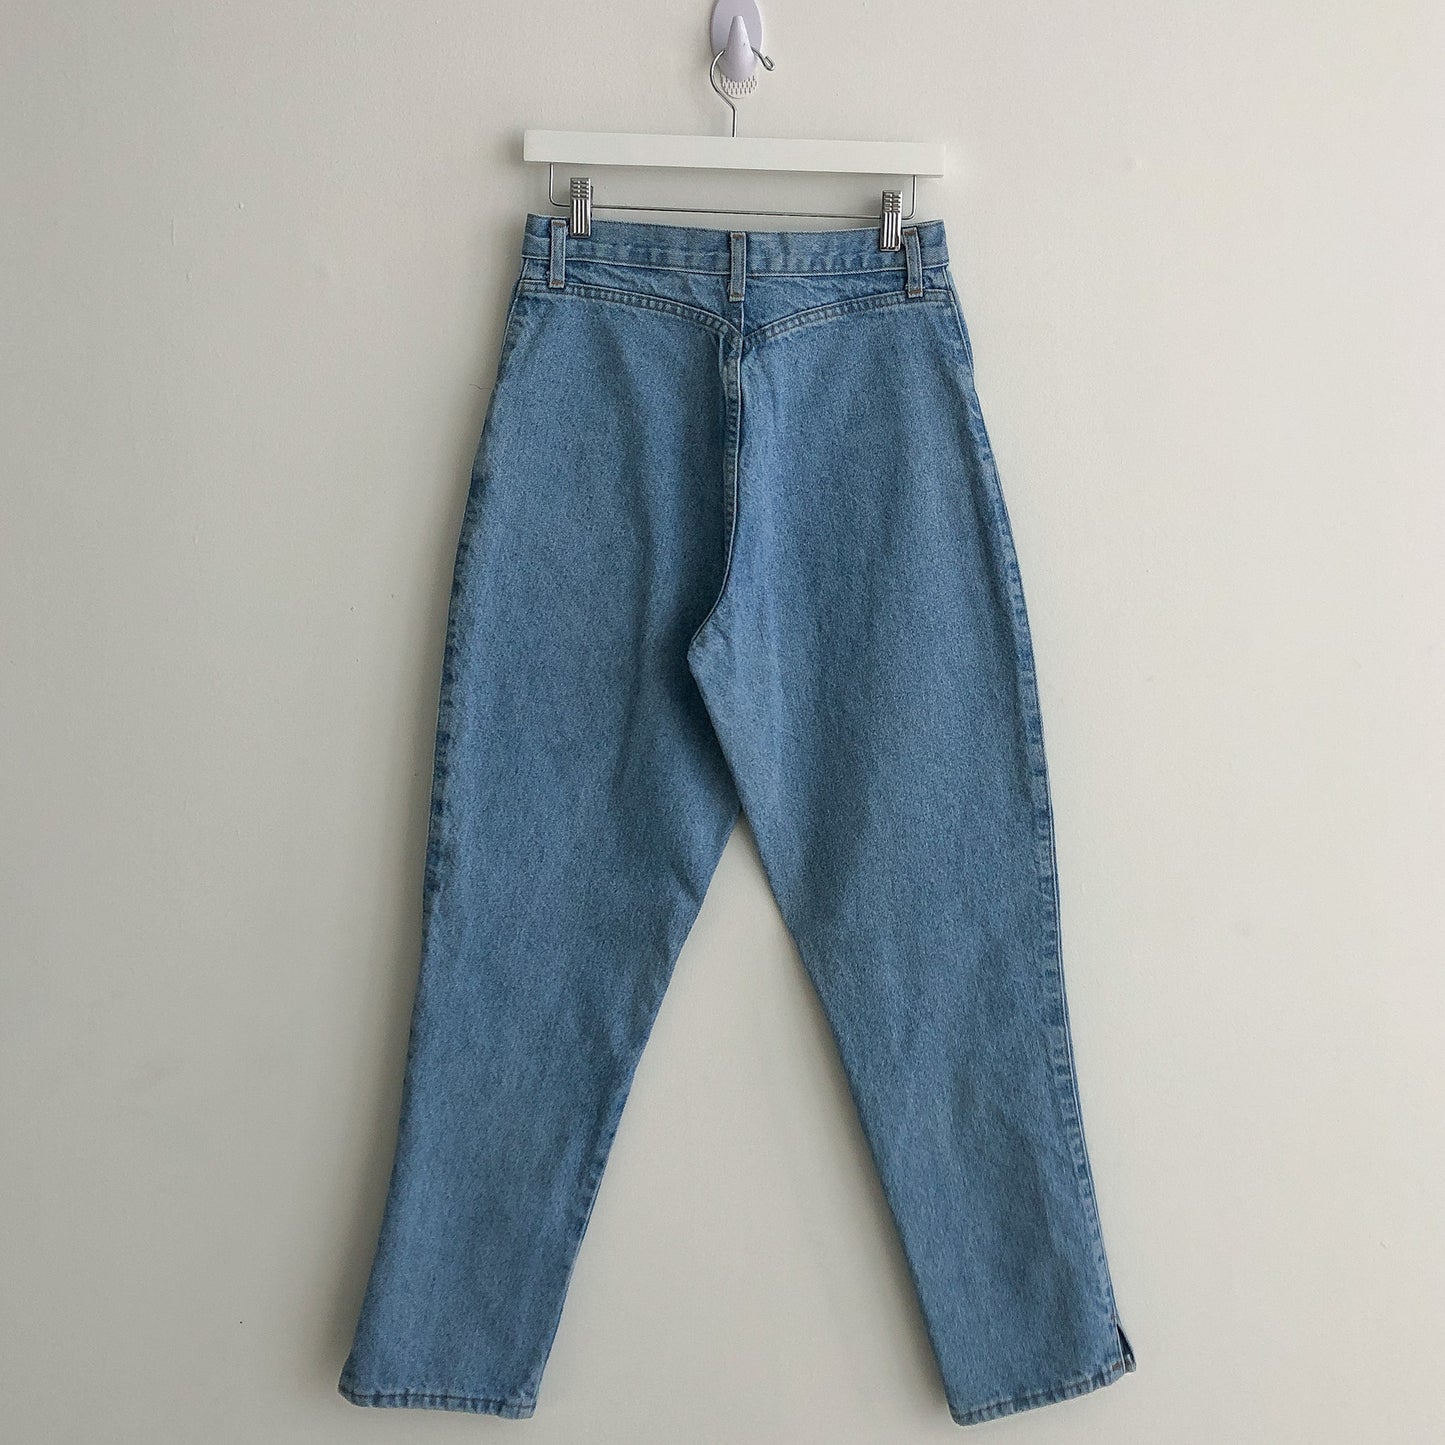 Vintage Jessie Jeanswear Embroidered Jeans